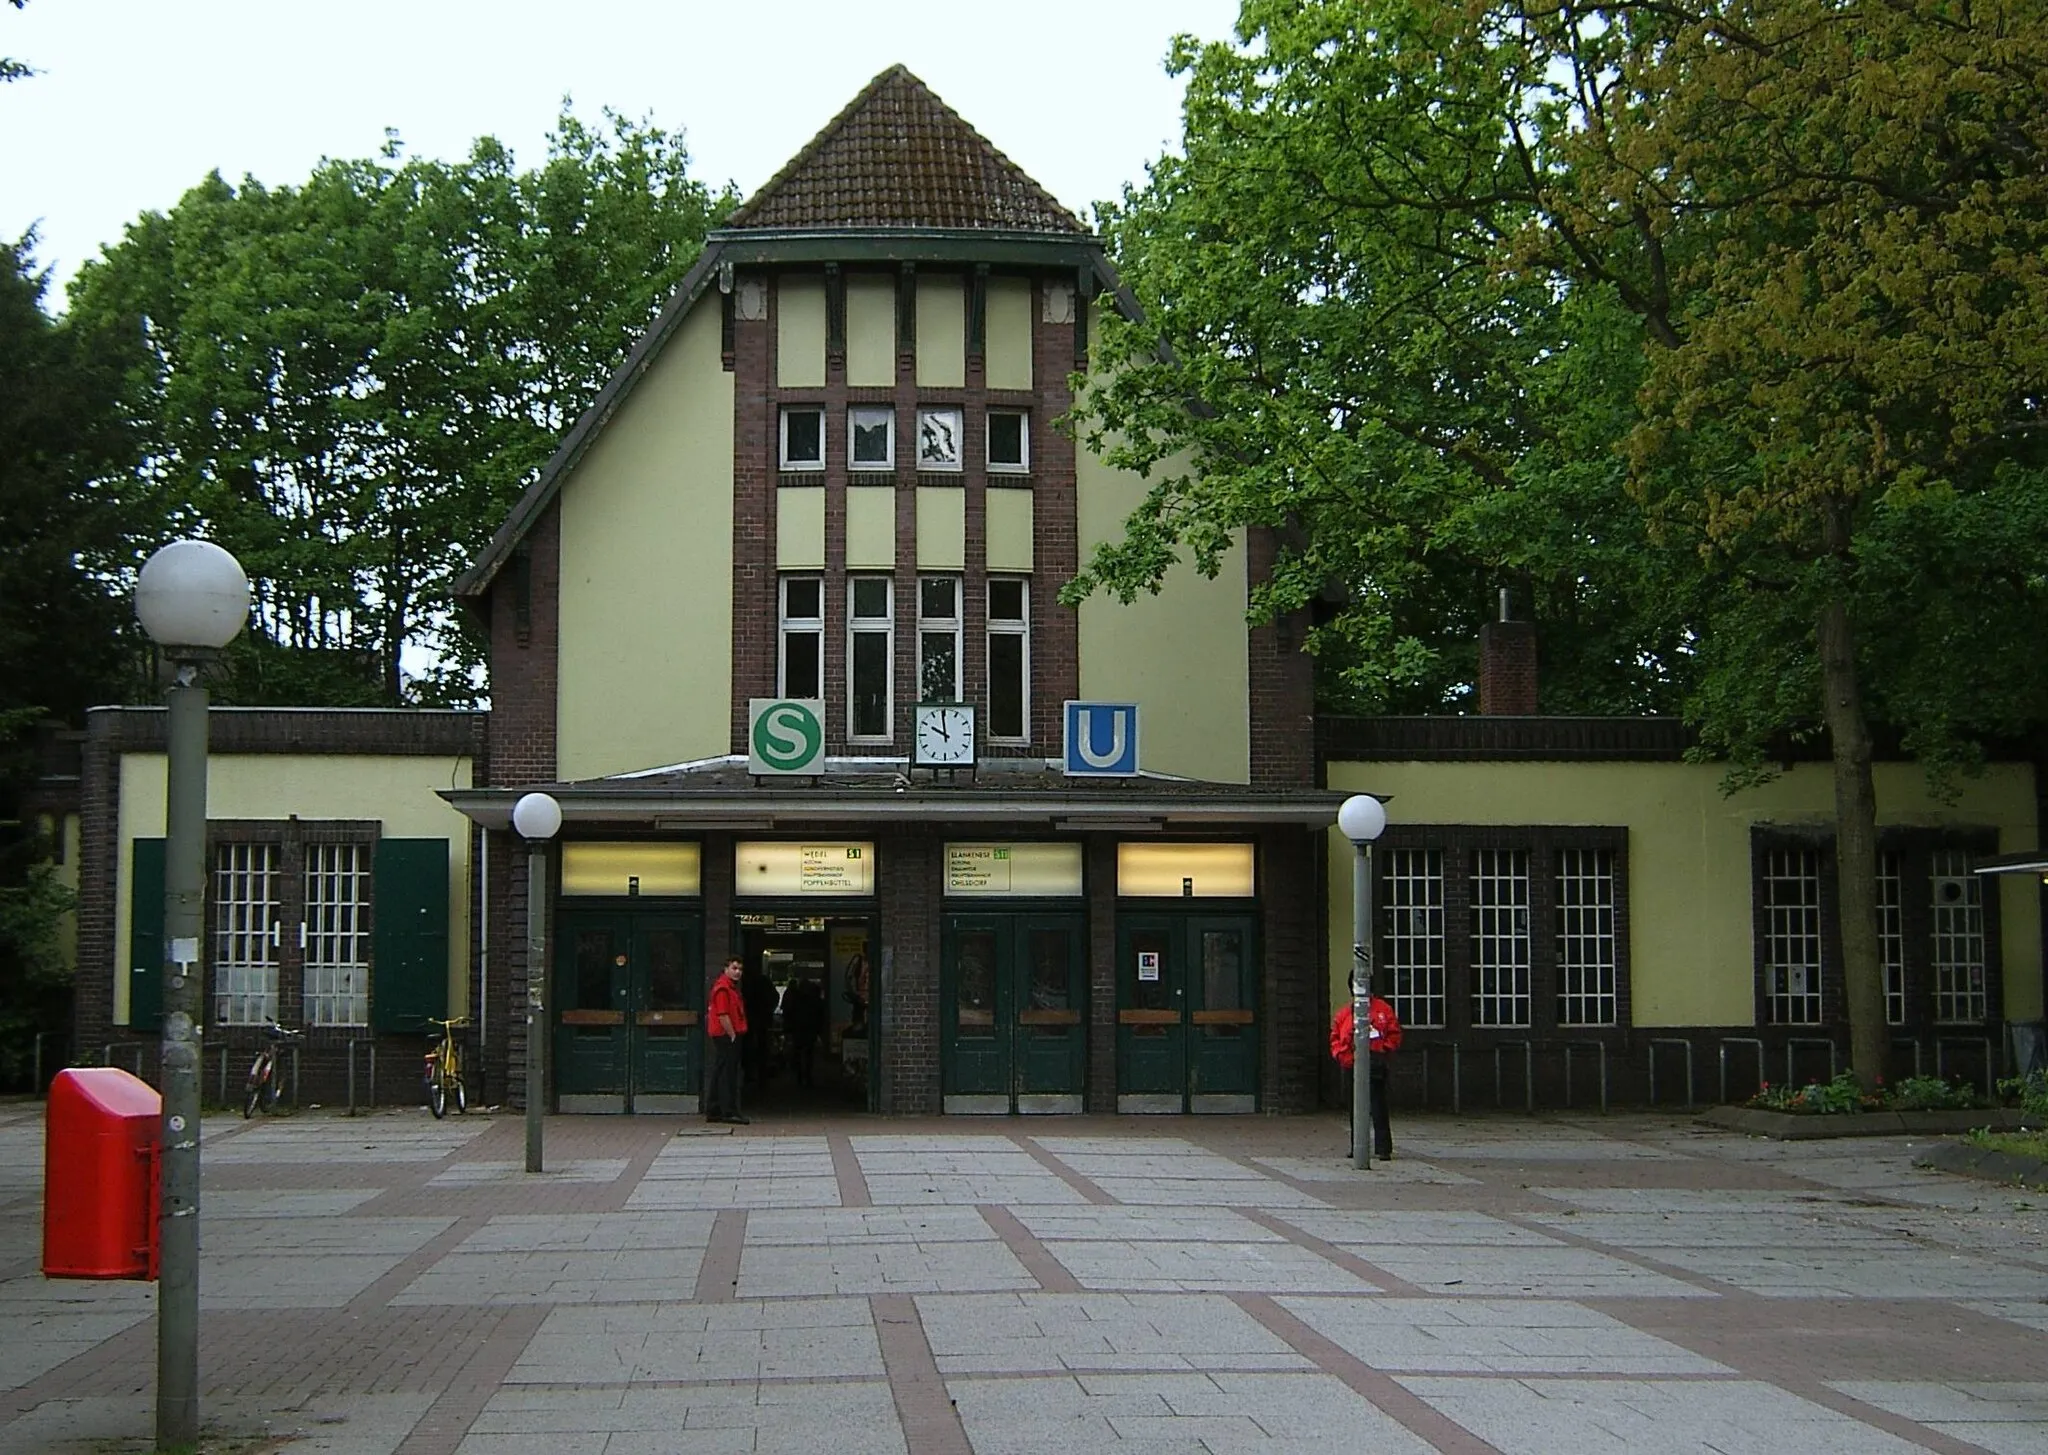 Photo showing: Bildbeschreibung: Hamburg, Ohlsdorf, Bahnhof
Fotograf: selbst
Datum: 28.5.2006